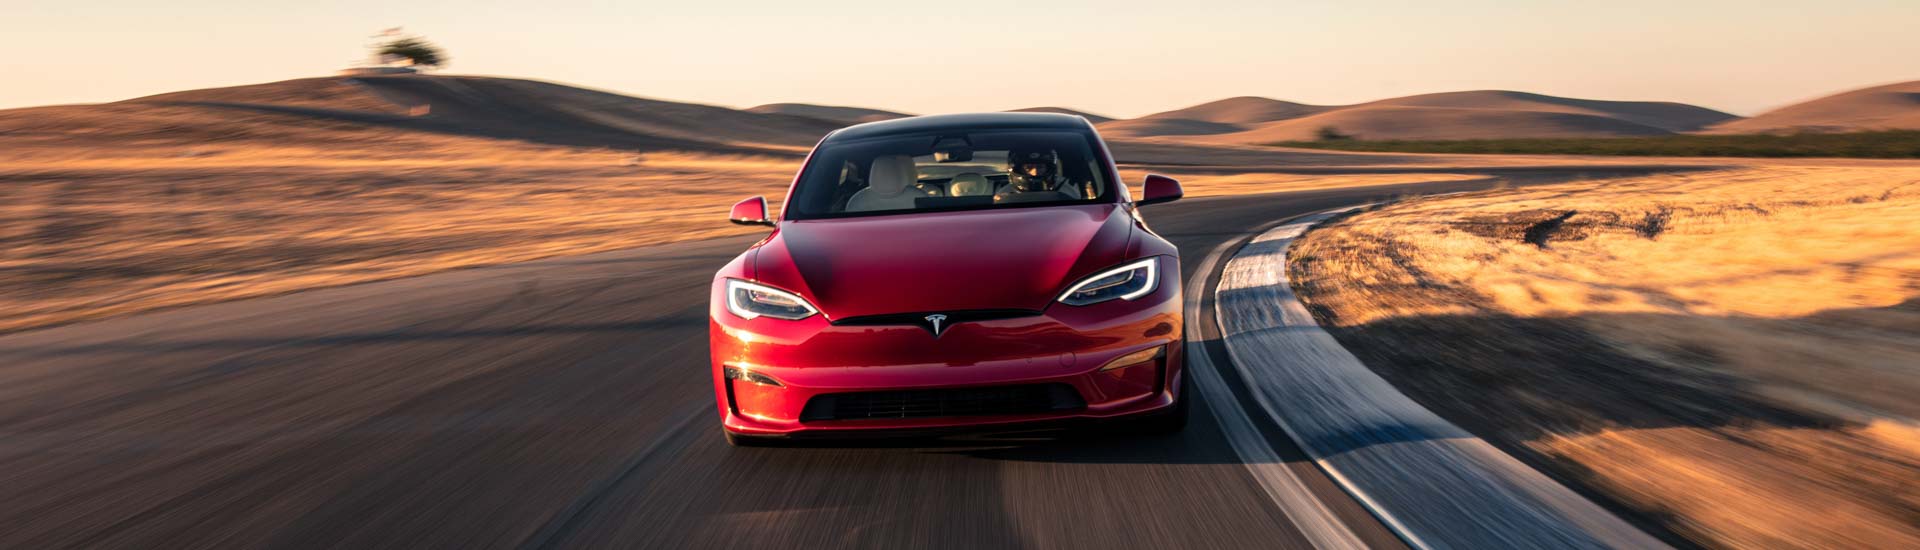 Tesla Model S Plaid finally achieves 322 km/h speed with new brakes, ET Auto